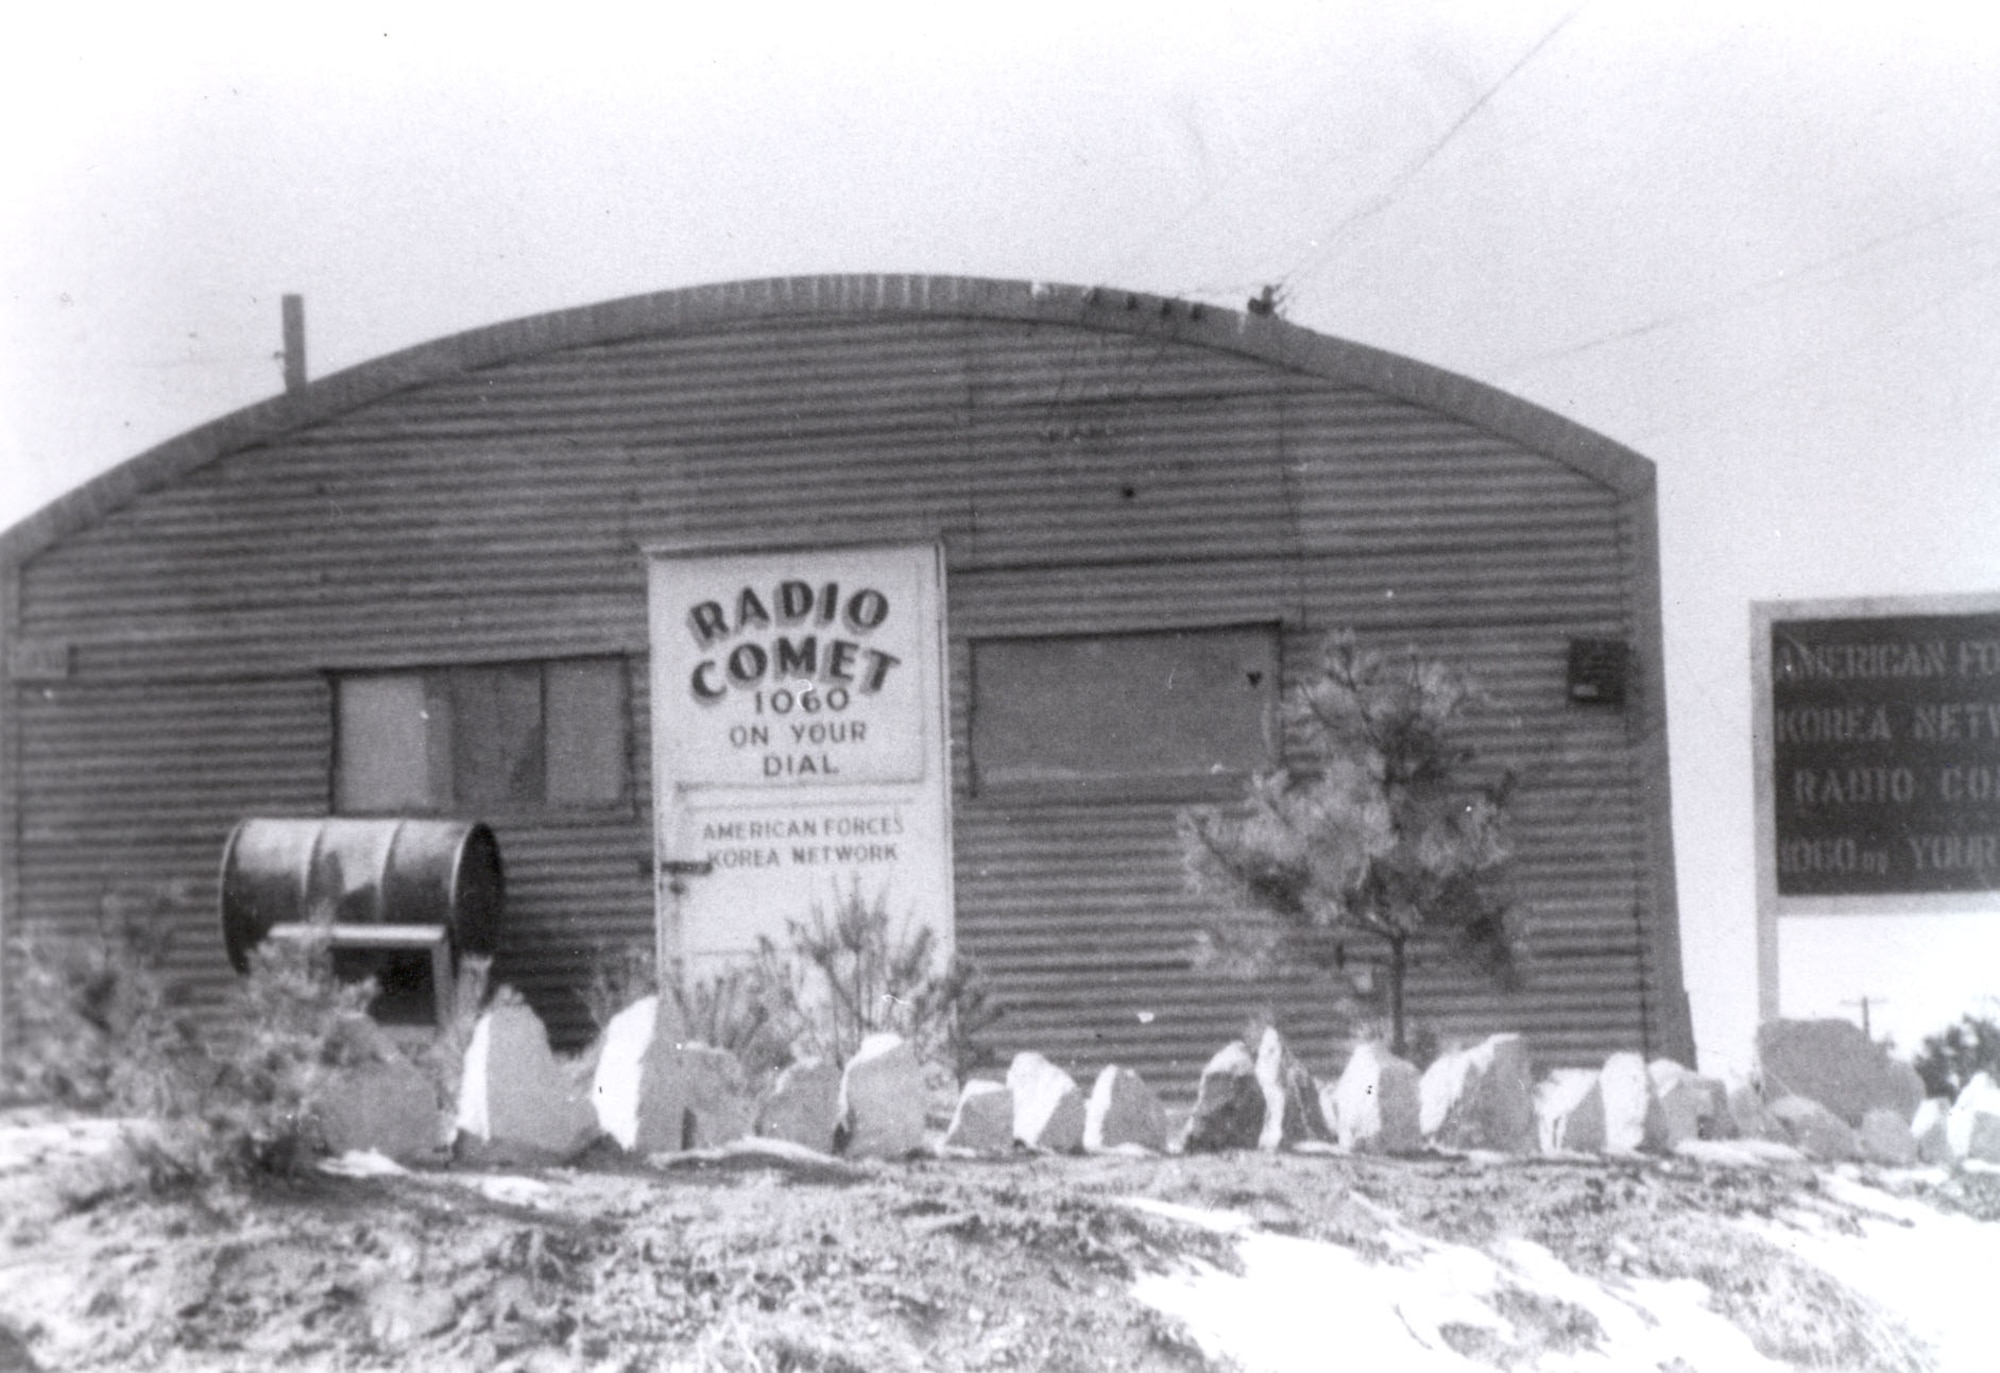 Radio Comet at Osan in 1956.